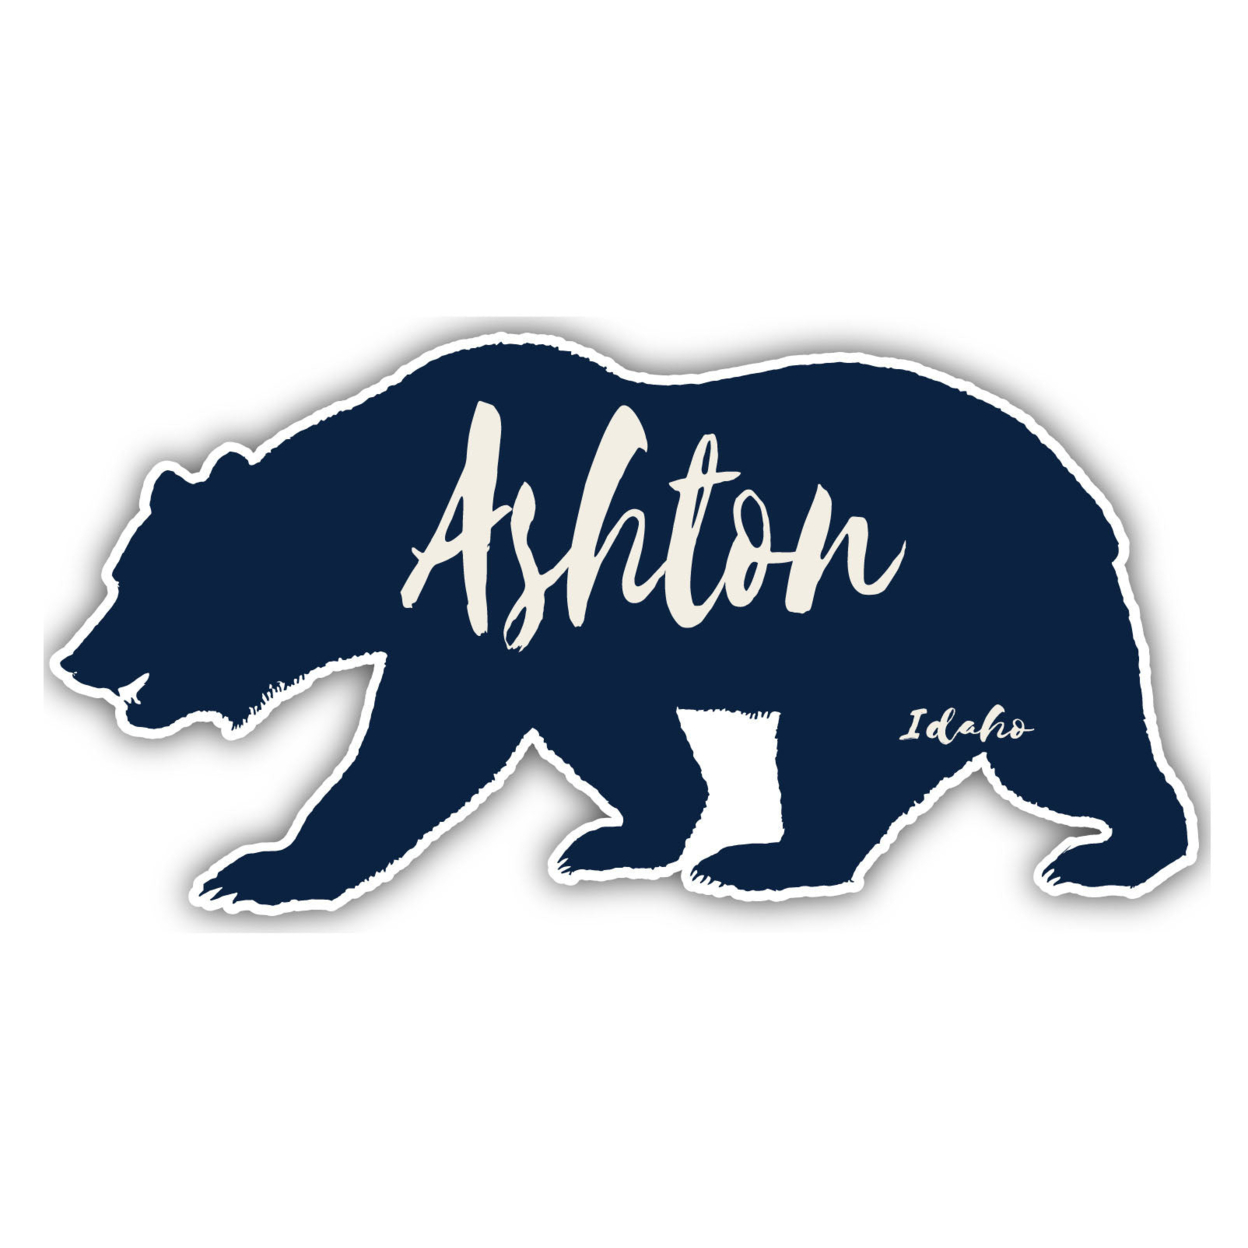 Ashton Idaho Souvenir Decorative Stickers (Choose Theme And Size) - 4-Pack, 2-Inch, Adventures Awaits